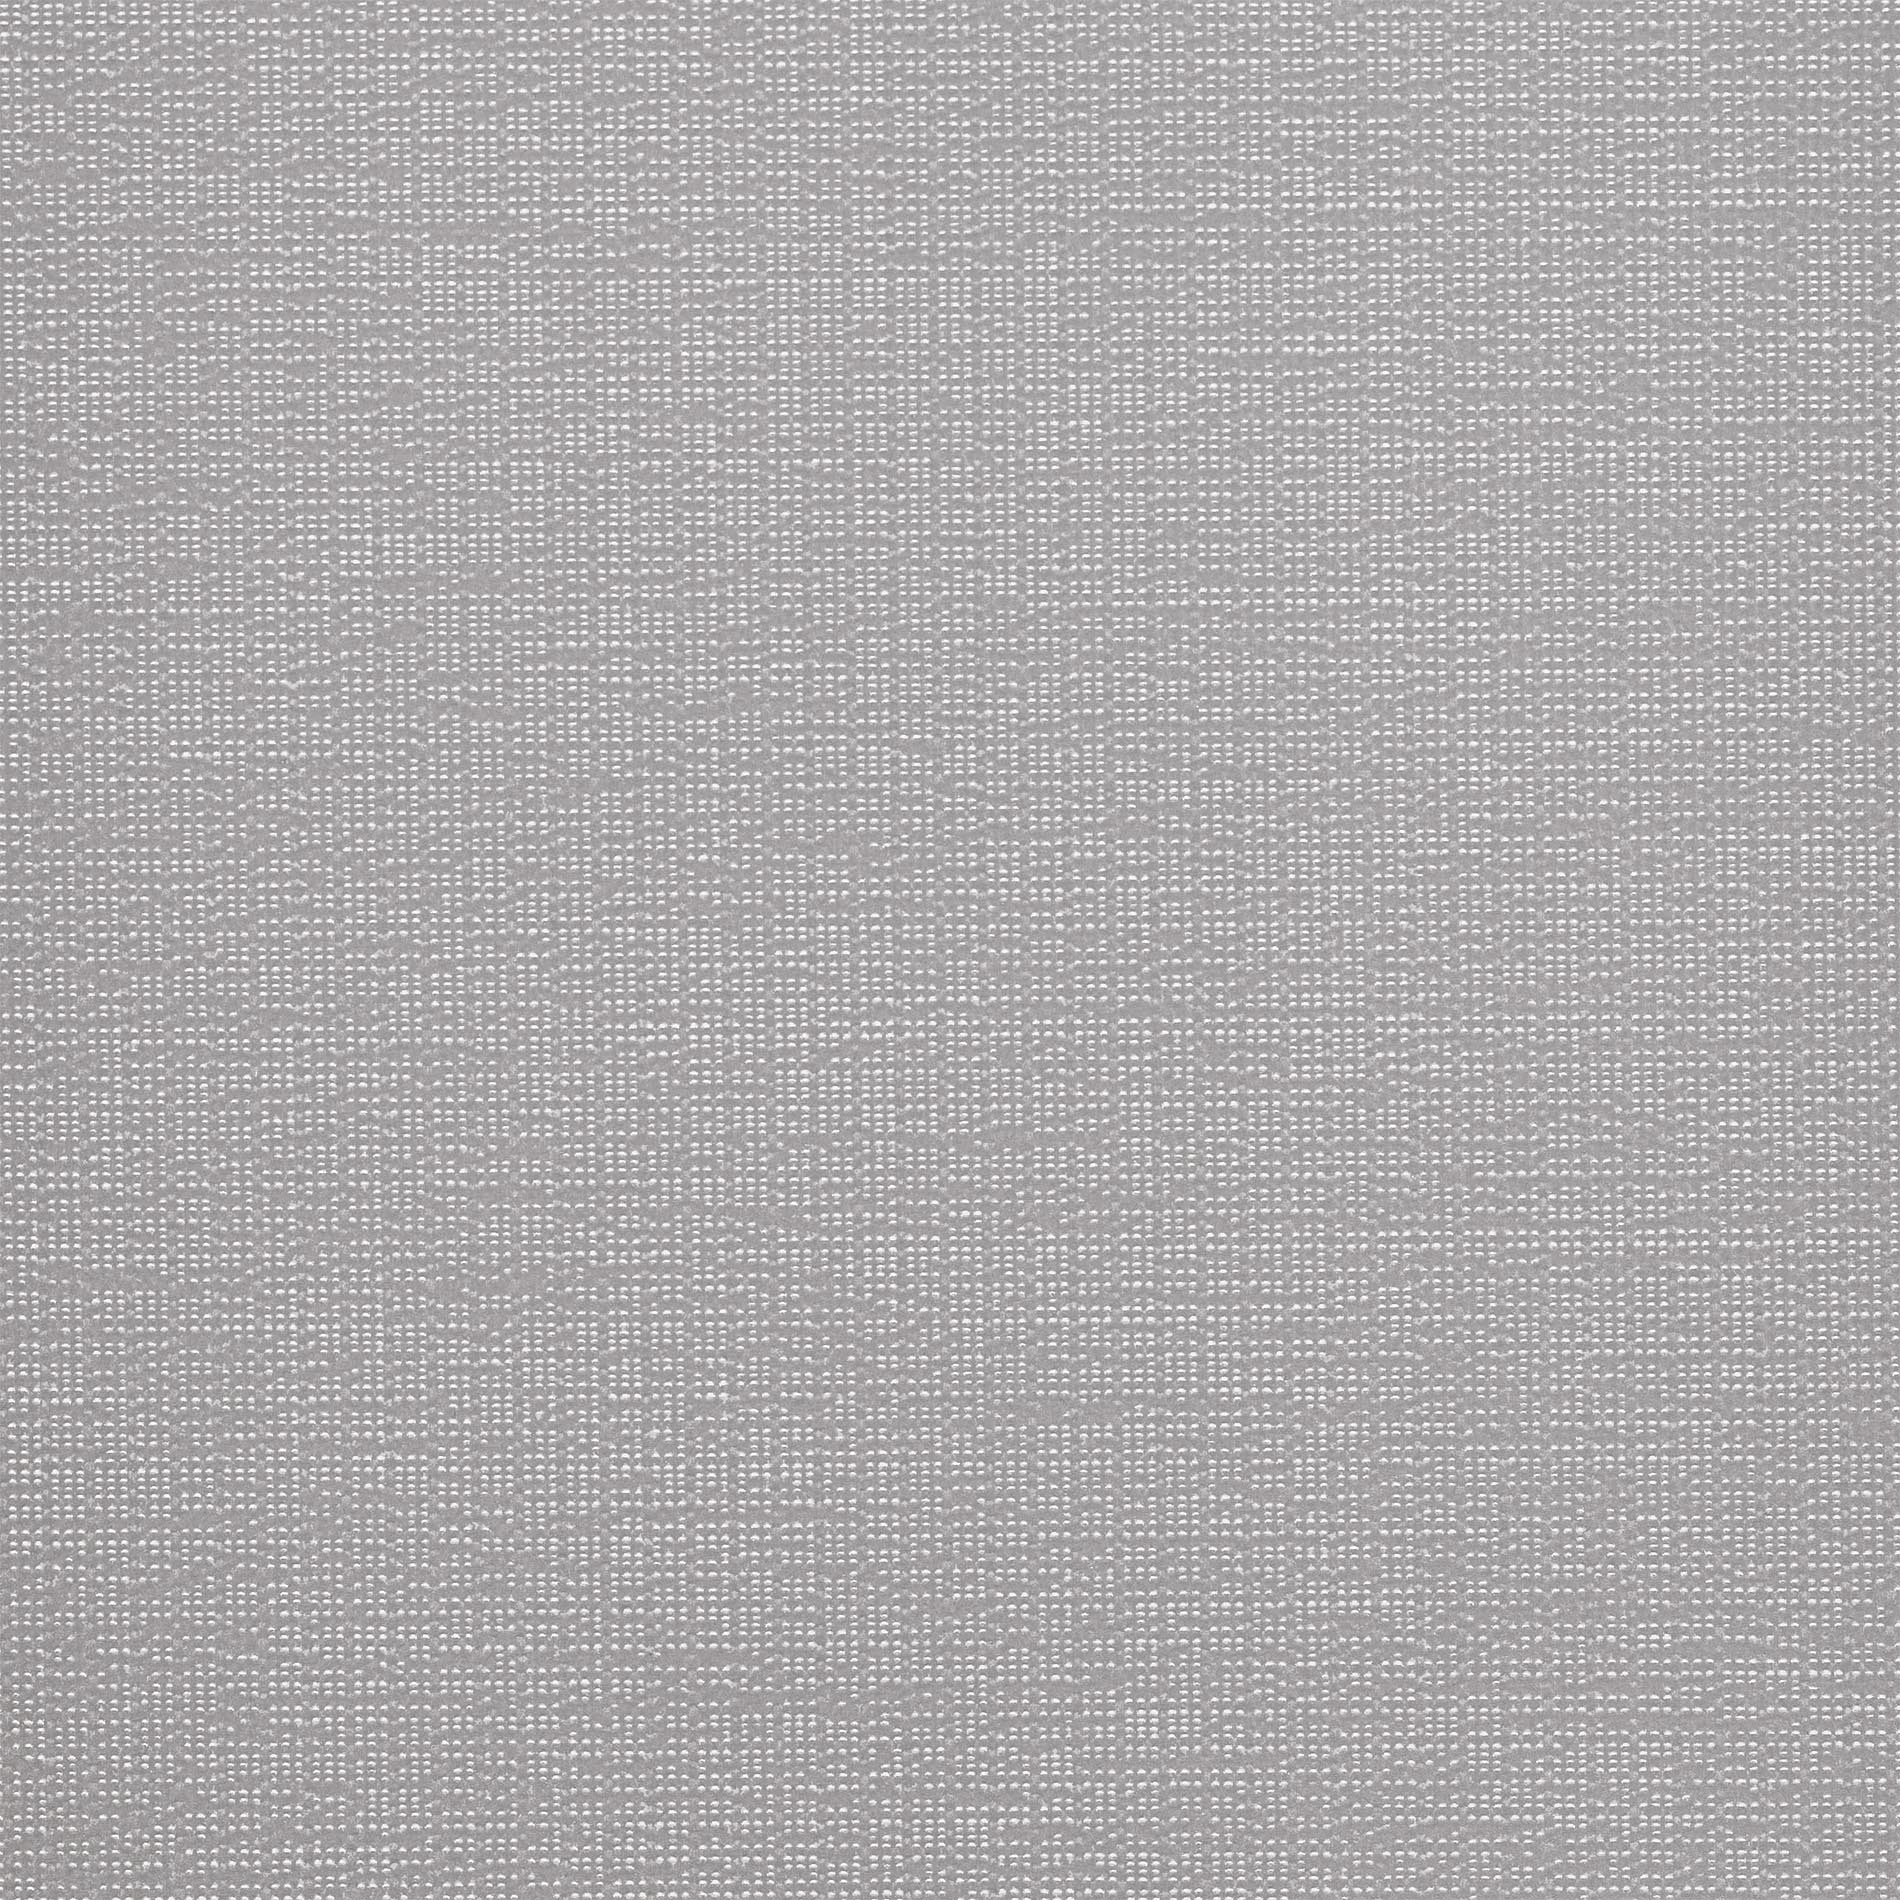 Altex - Fabric - SOLTIS PERFORM 92 - Alu/Oat - 92-2046